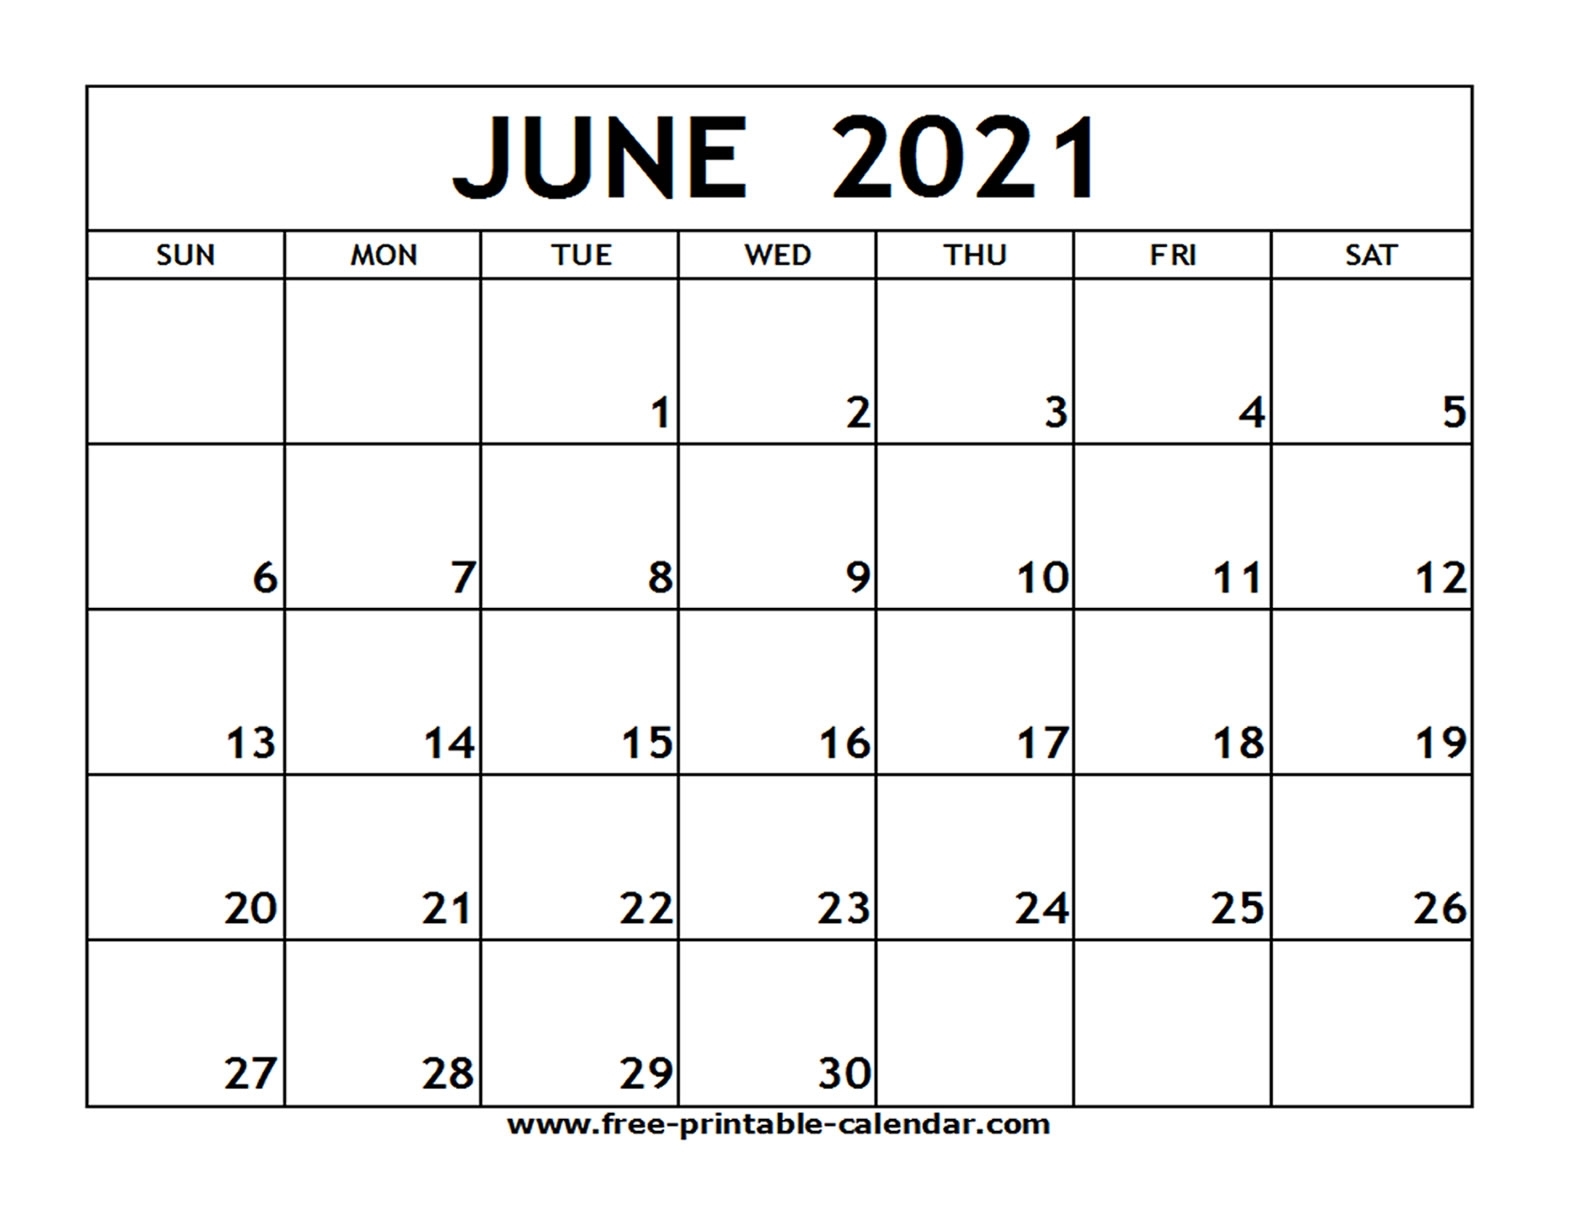 June 2021 Printable Calendar - Free-Printable-Calendar